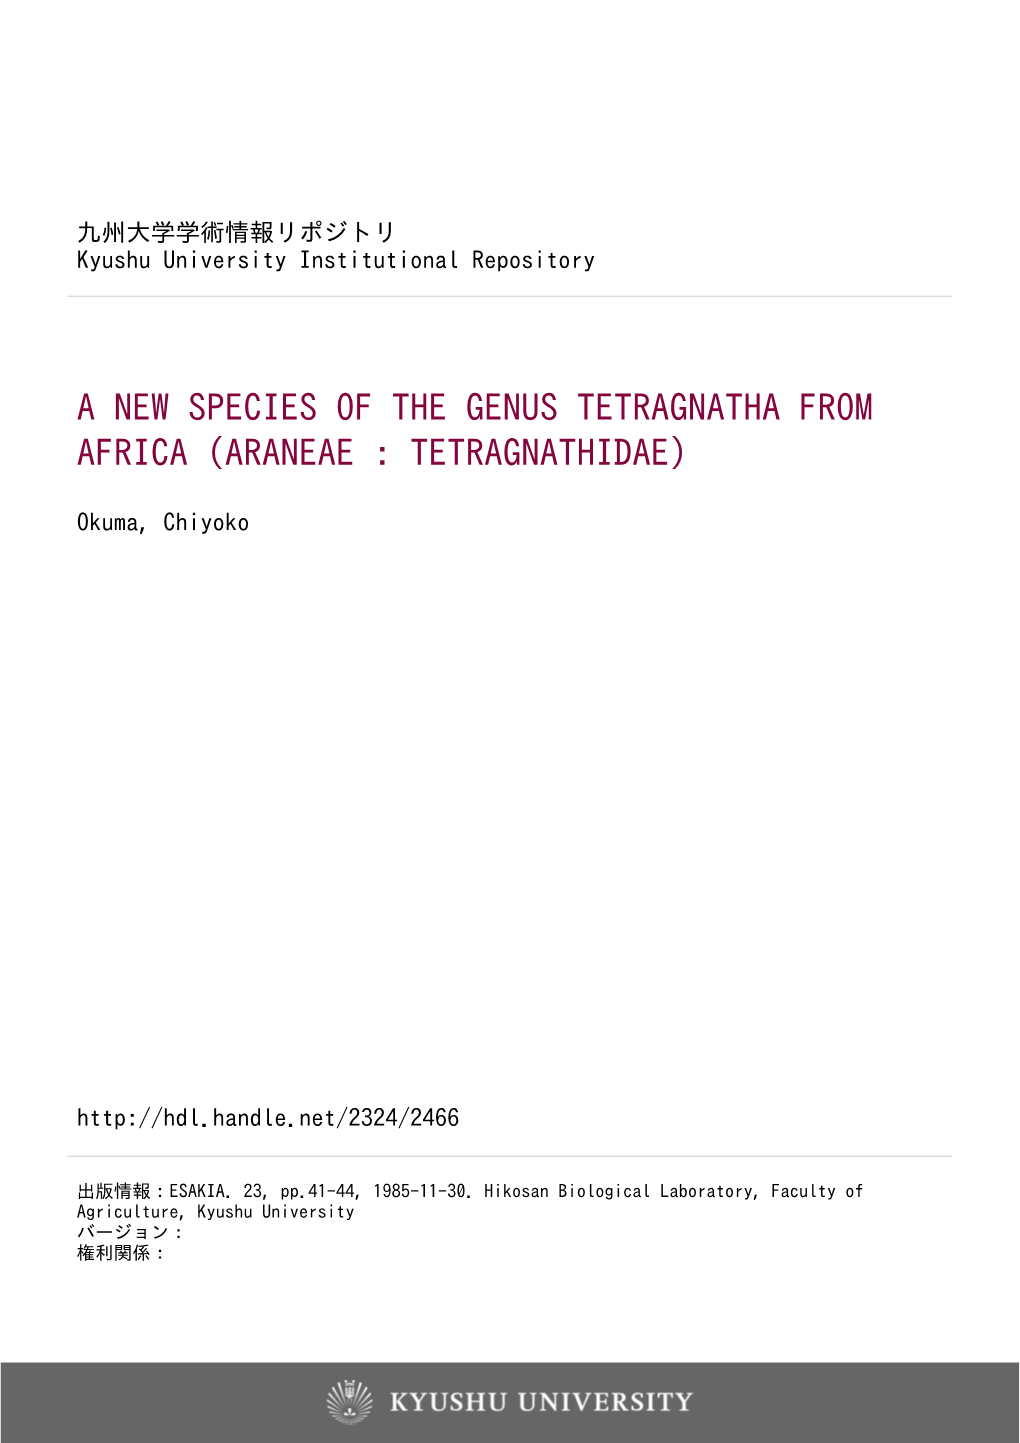 A New Species of the Genus Tetragnatha from Africa (Araneae : Tetragnathidae)